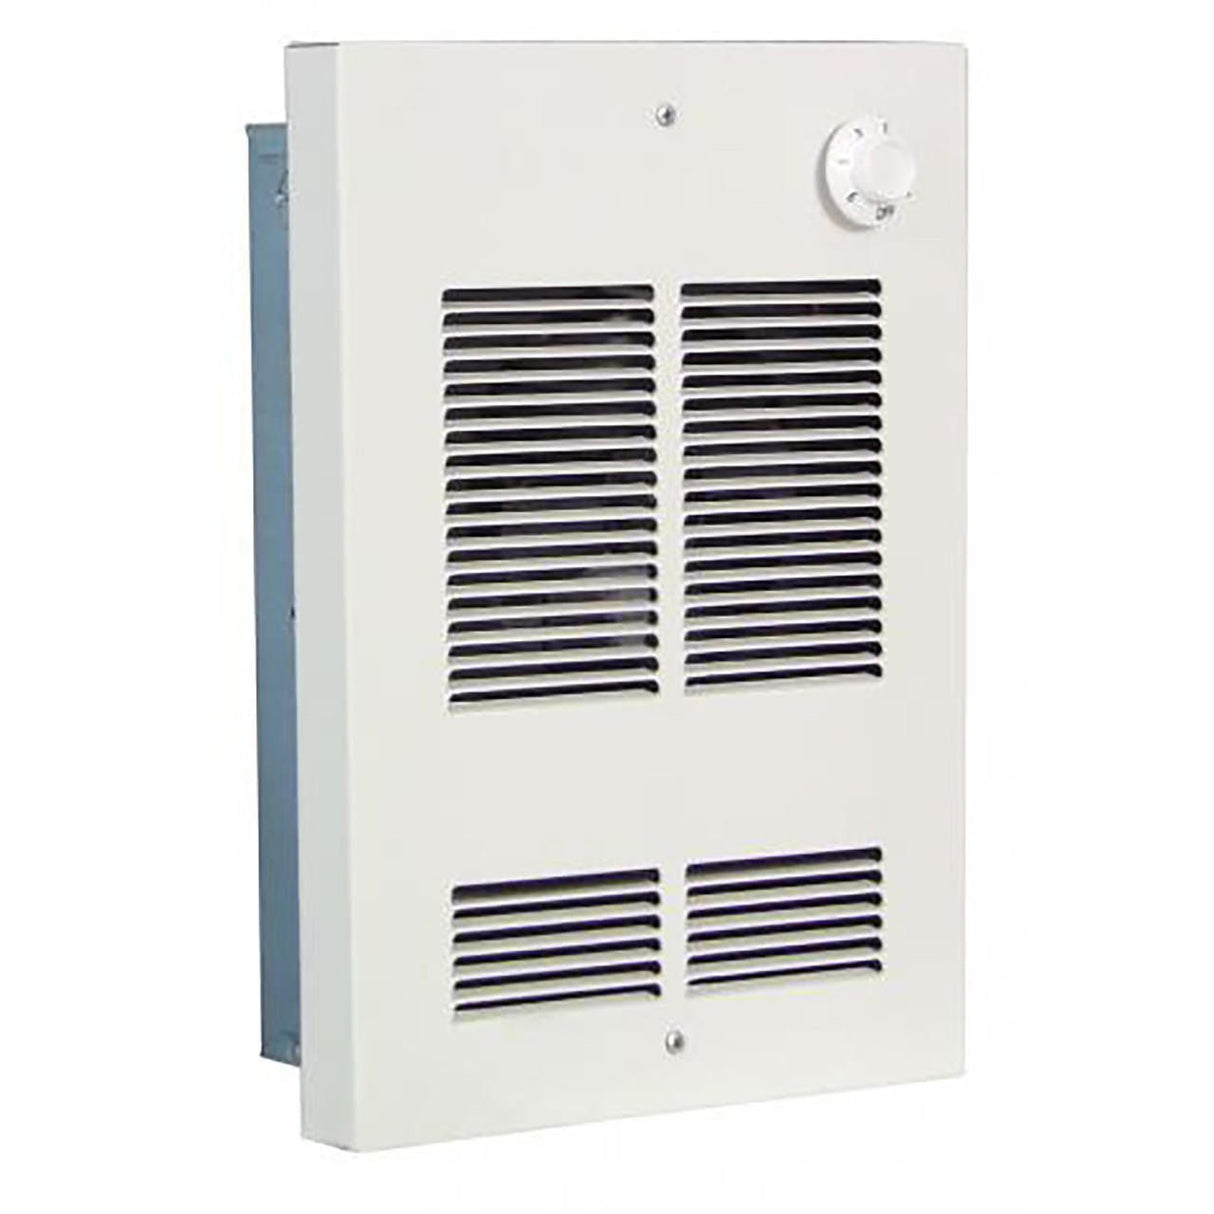 Berko SED1512 Electric Wall Heater, 1,500W, 120V/1Ph, White